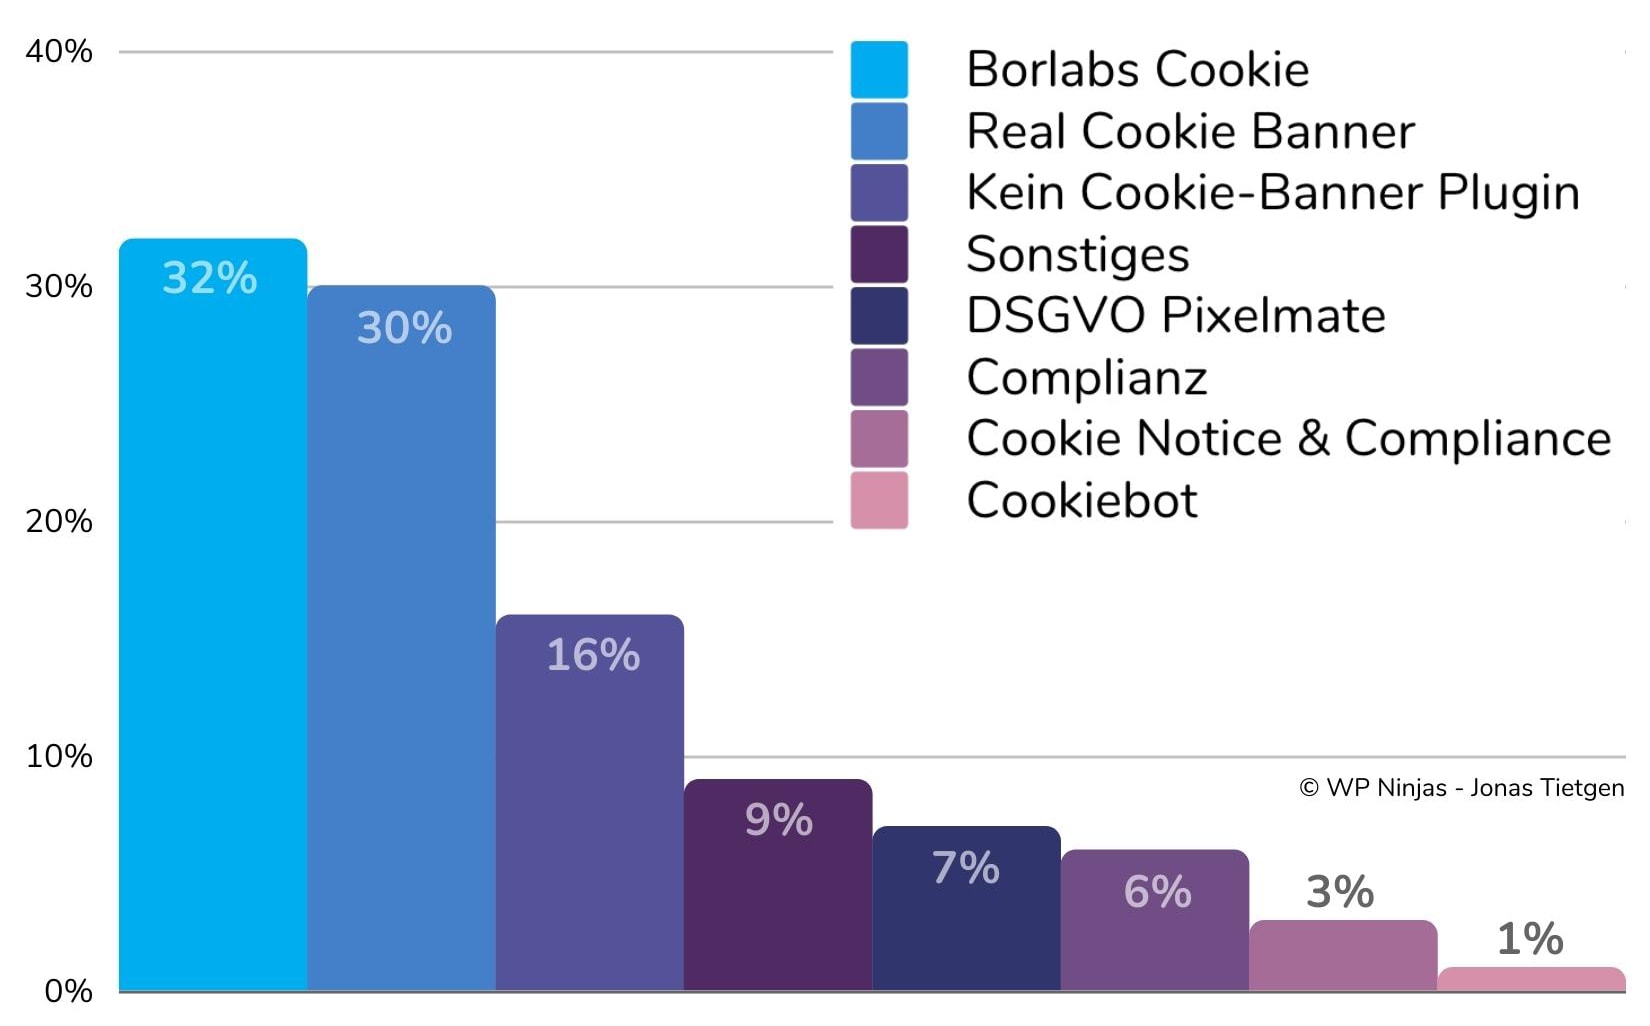 WordPress Cookie Banner Plugins Marktanteile - Statistik